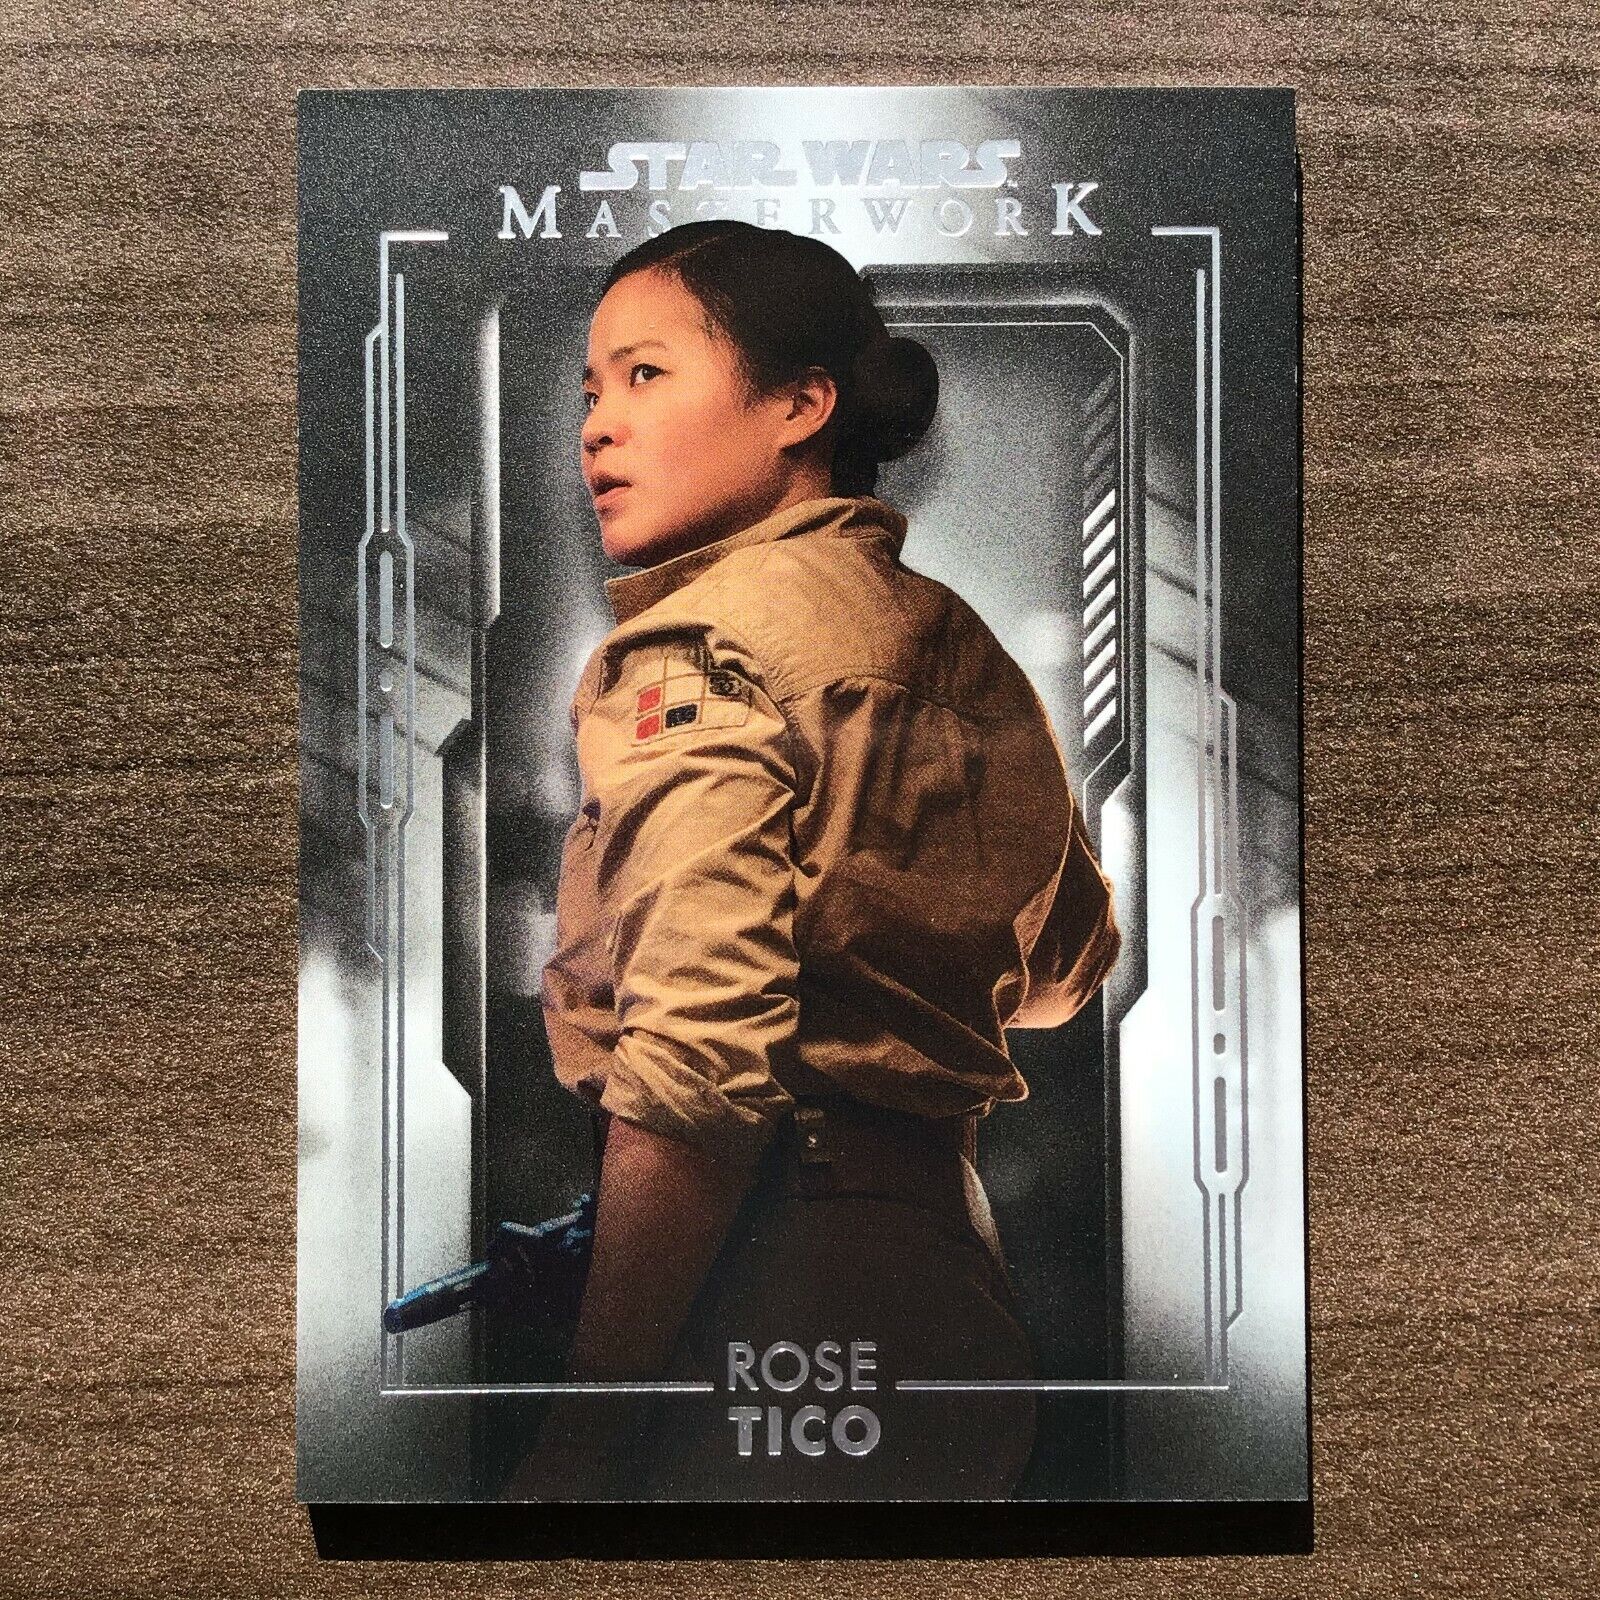 2020 Topps Star Wars Masterwork Base Card ~ Pick your Card